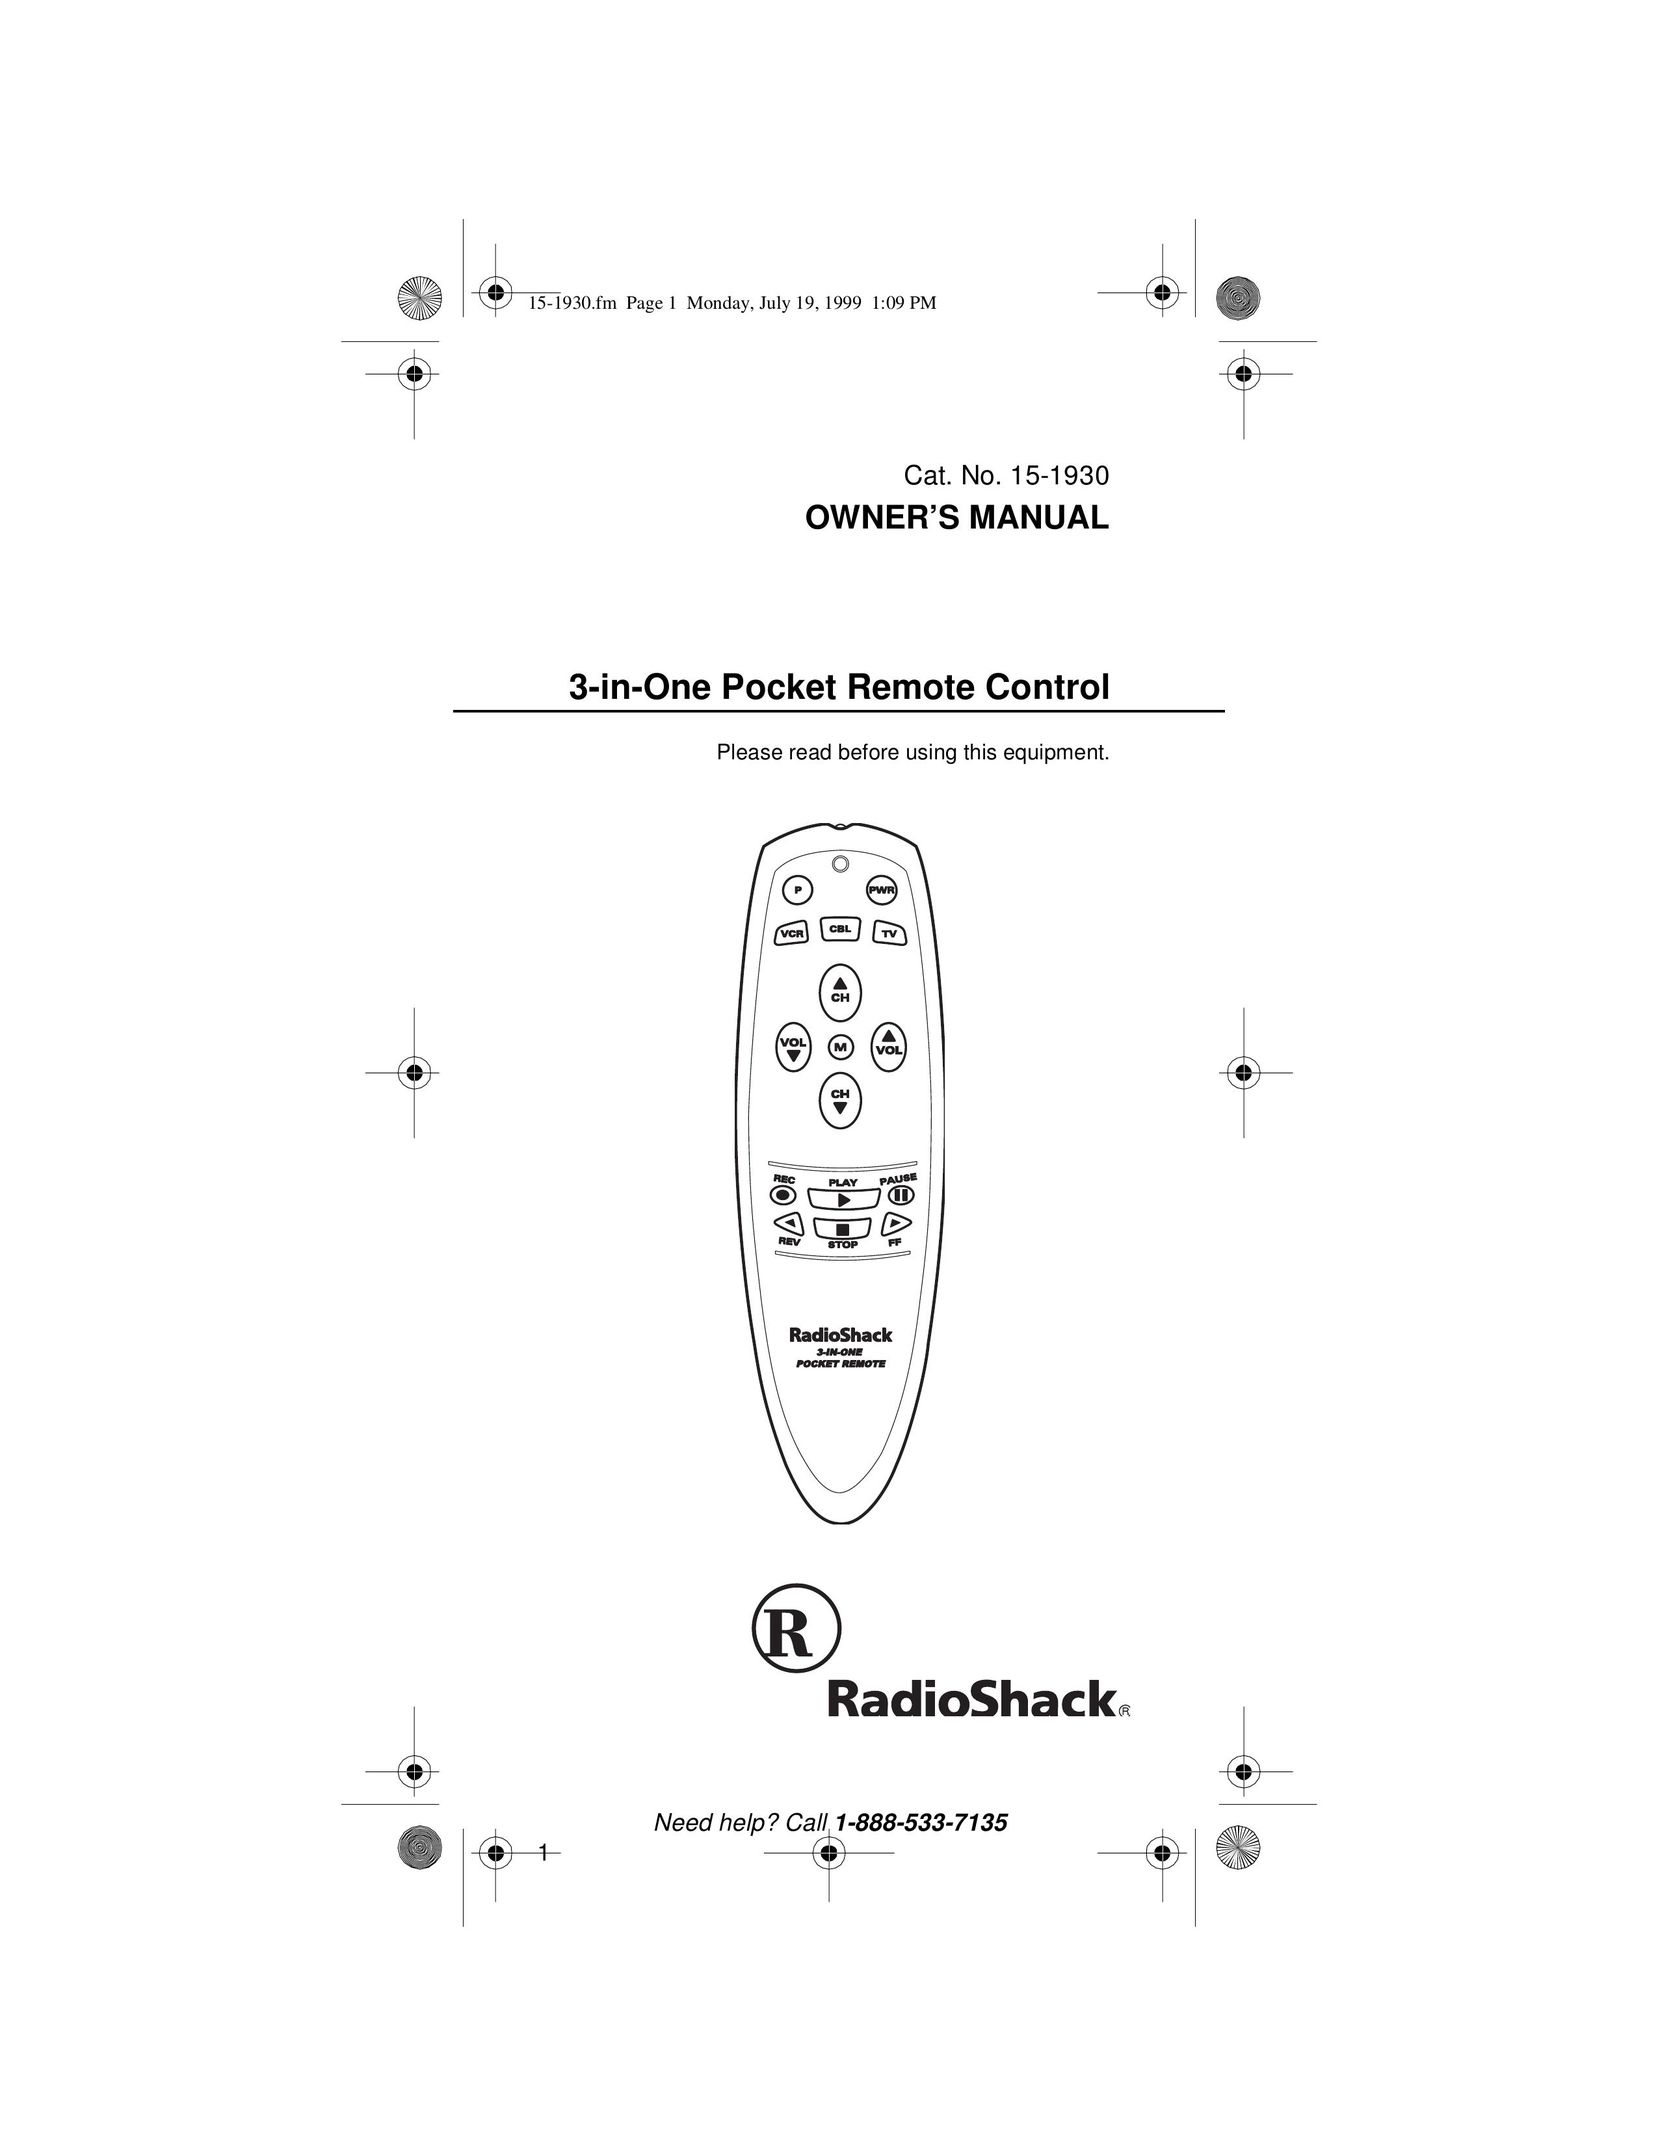 Radio Shack 3-in-One Pocket Remote Universal Remote User Manual